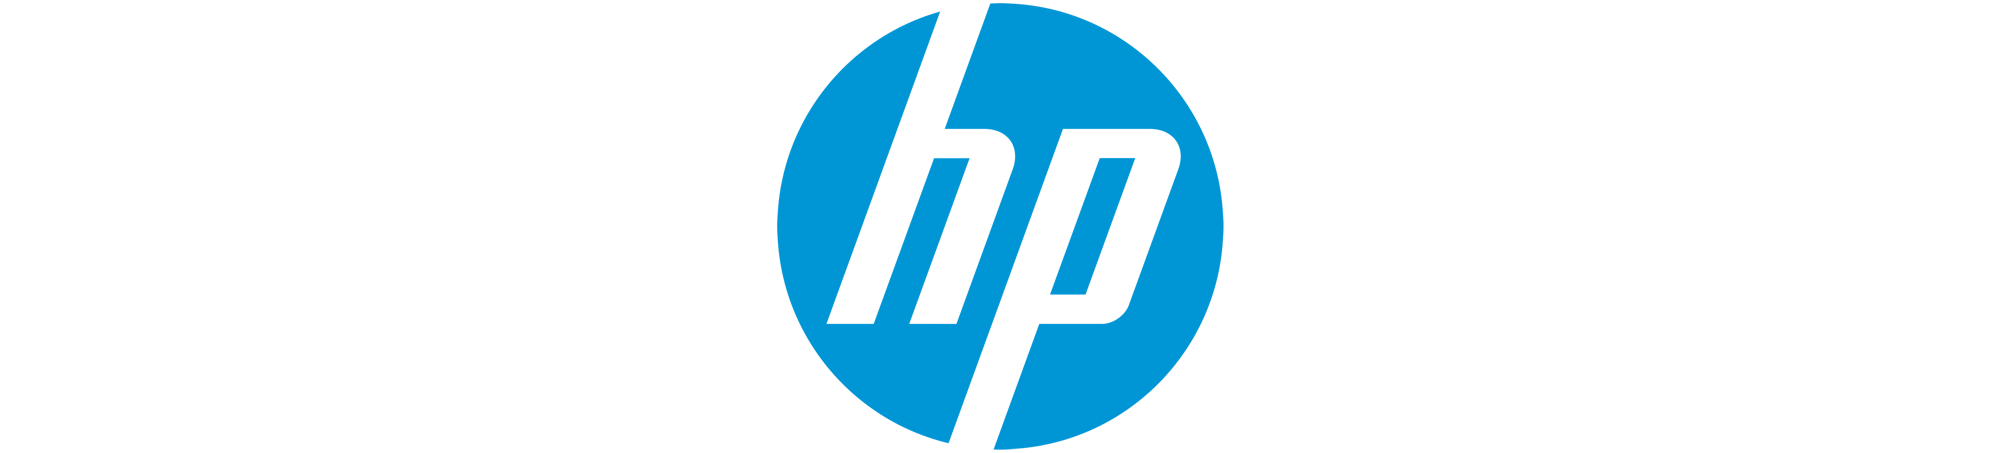 Logo Hp Inc PNG Transparent Logo Hp Inc.PNG Images. | PlusPNG